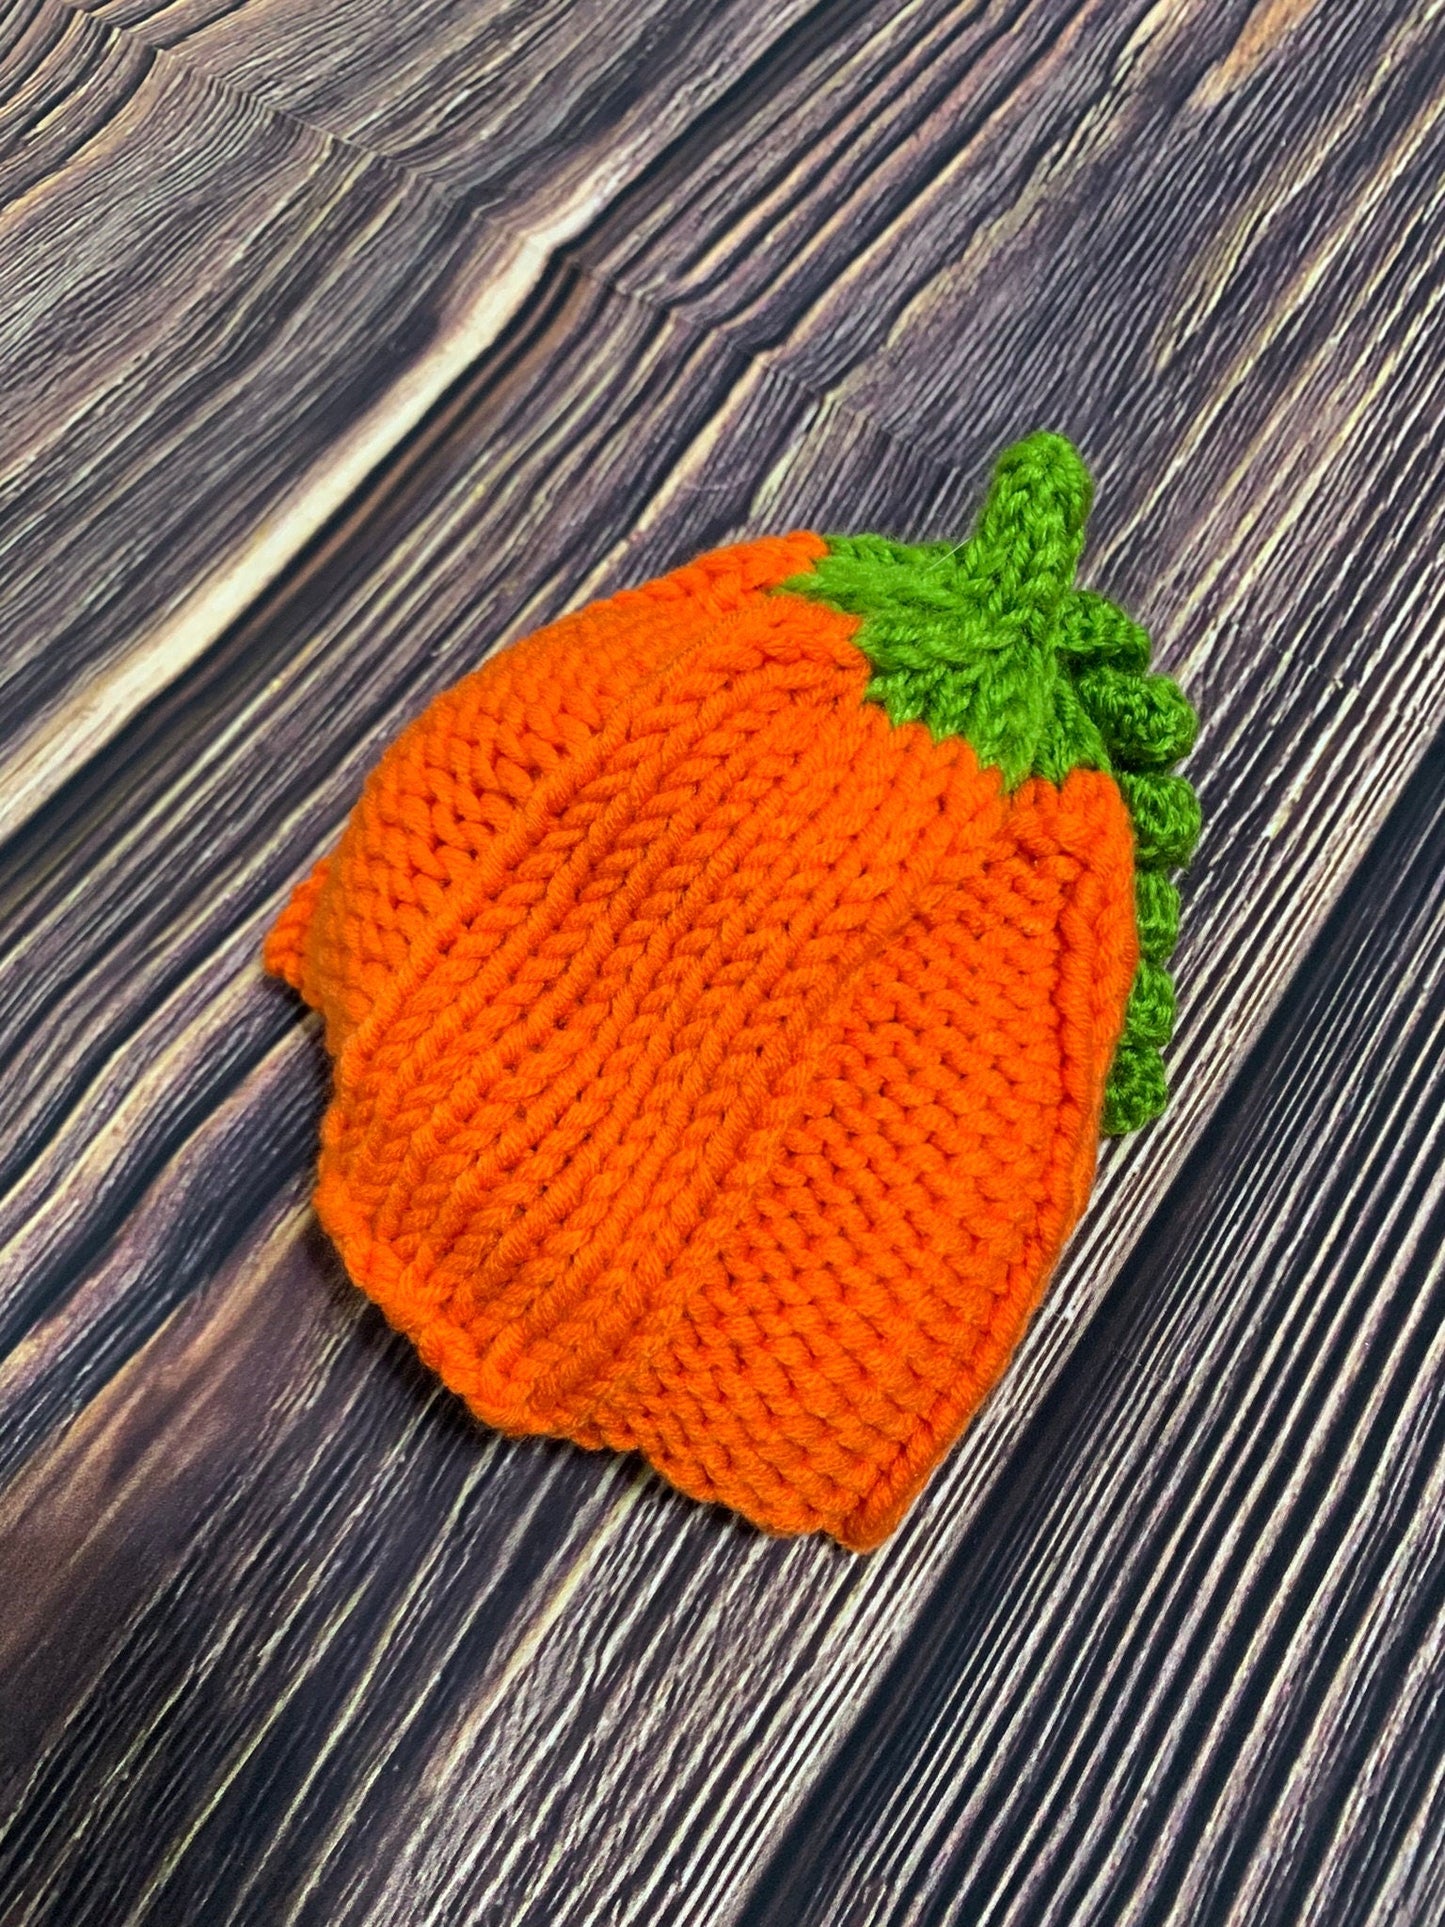 Handmade Tiny Baby Pumpkin Crochet Costume - Newborn Exclusive - TinySweetPeaBoutique